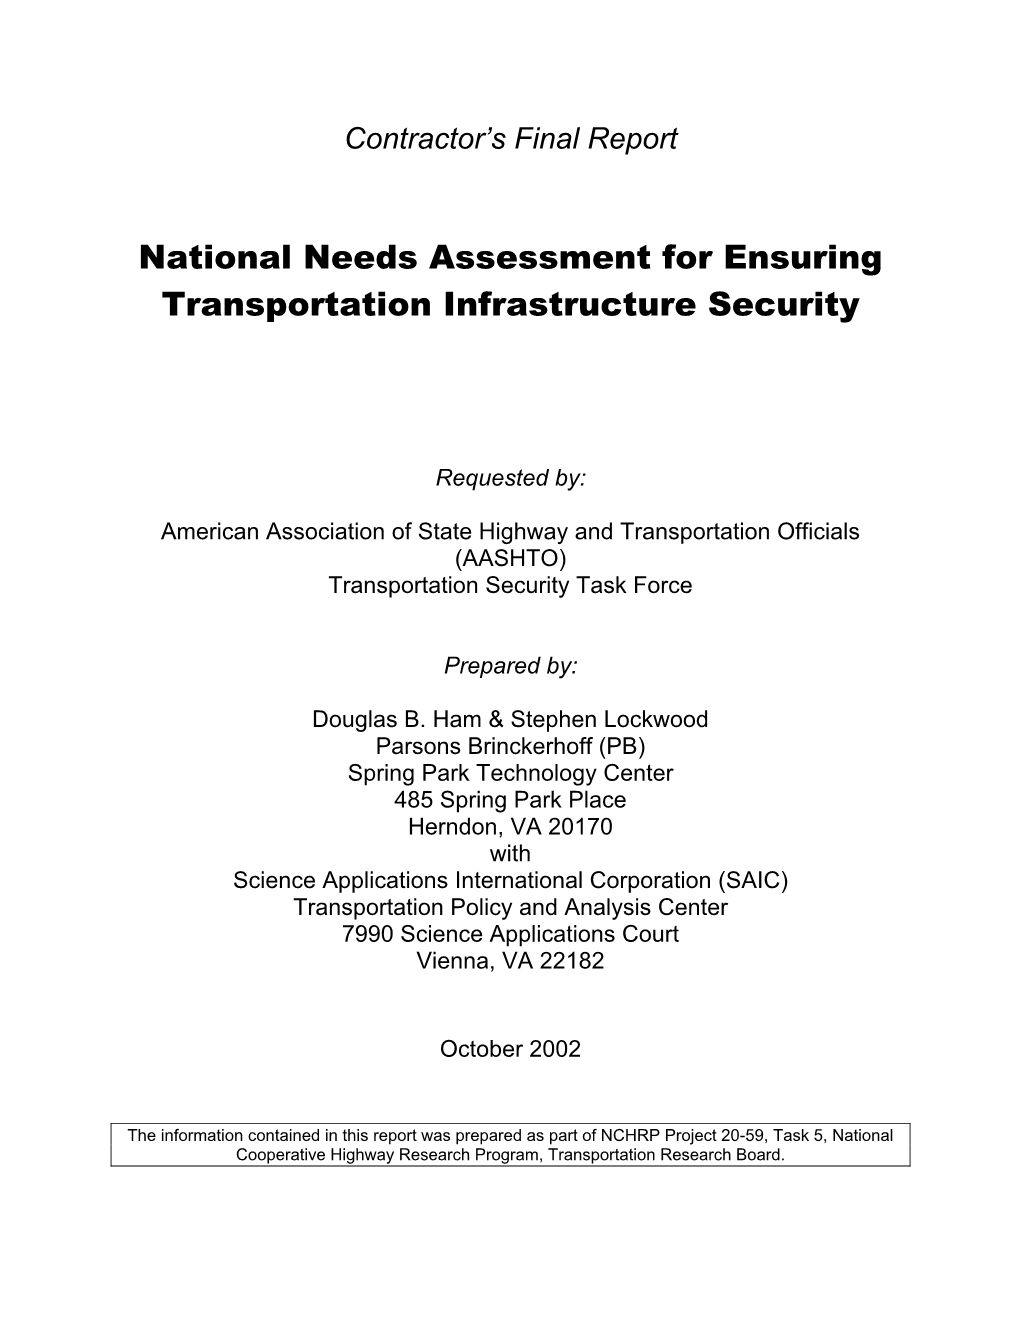 National Needs Assessment for Ensuring Transportation Infrastructure Security